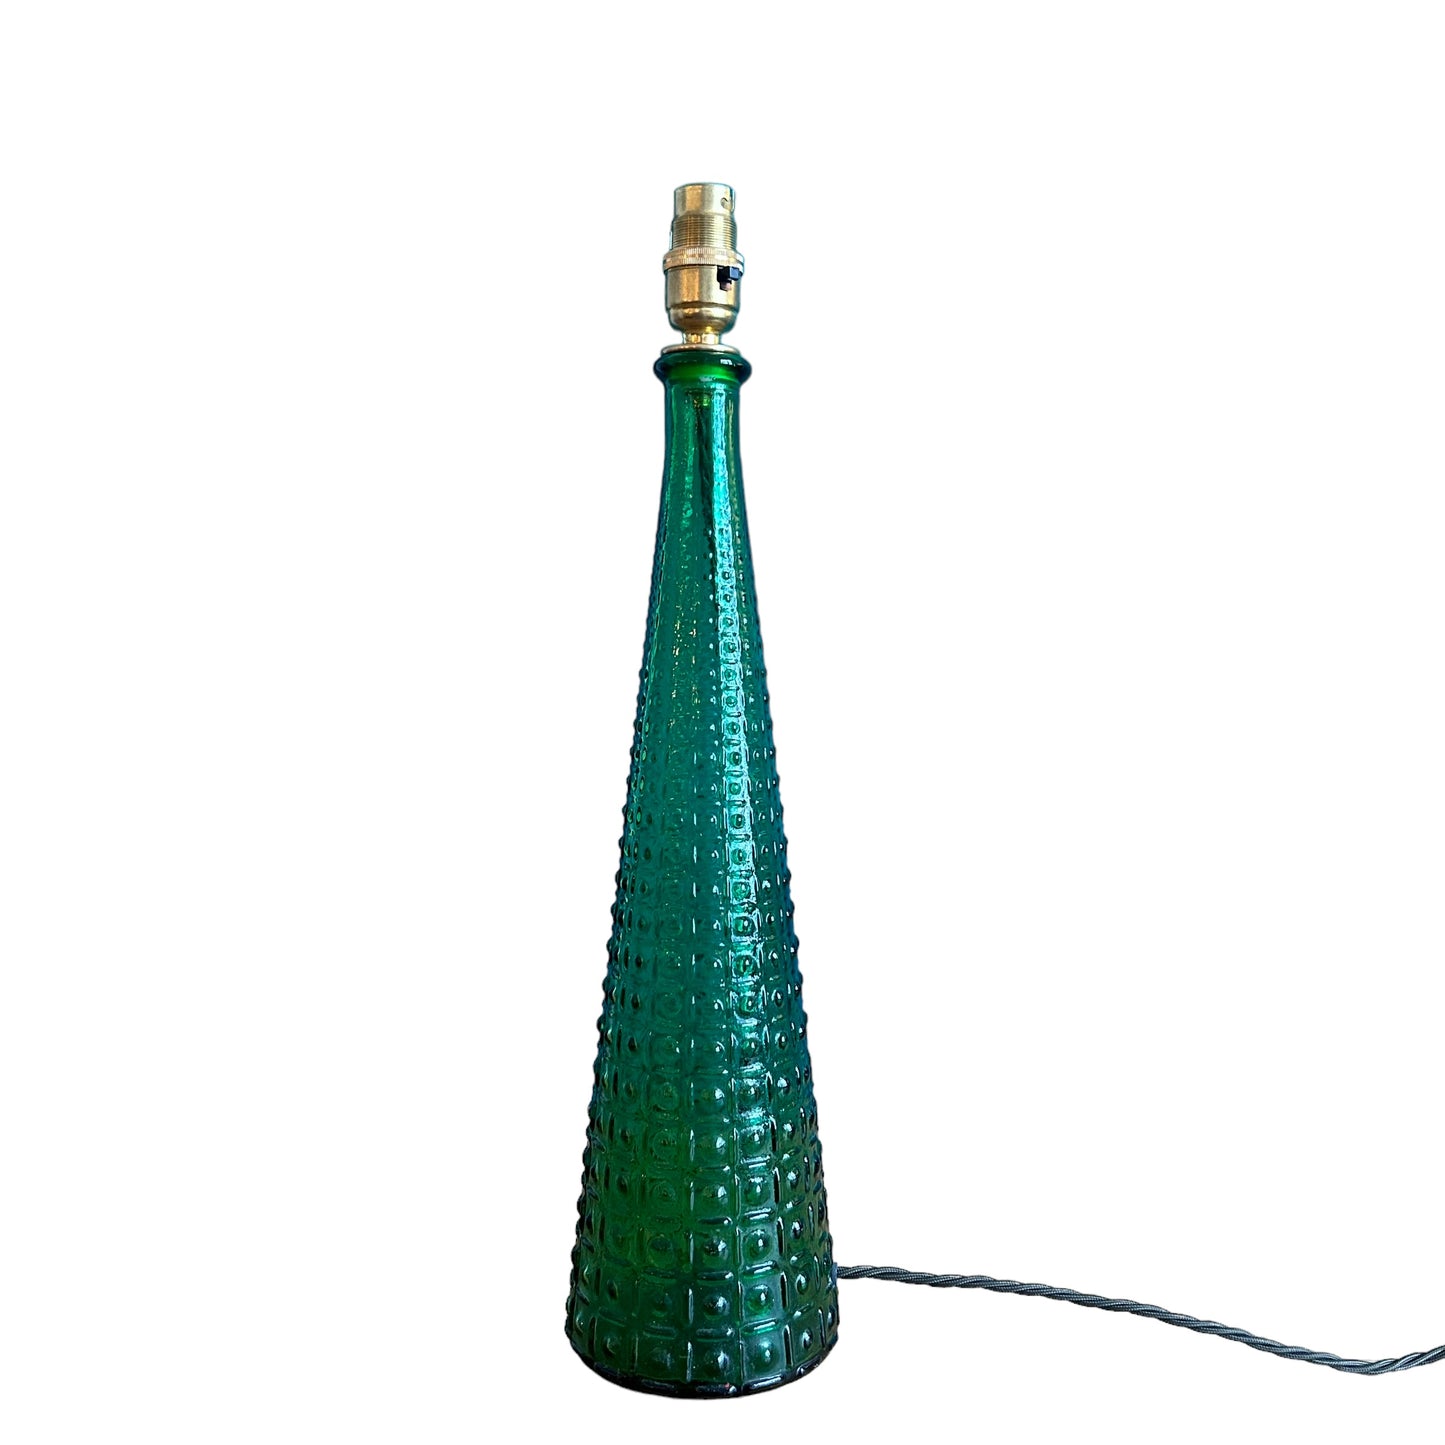 Glass cone lamp in green